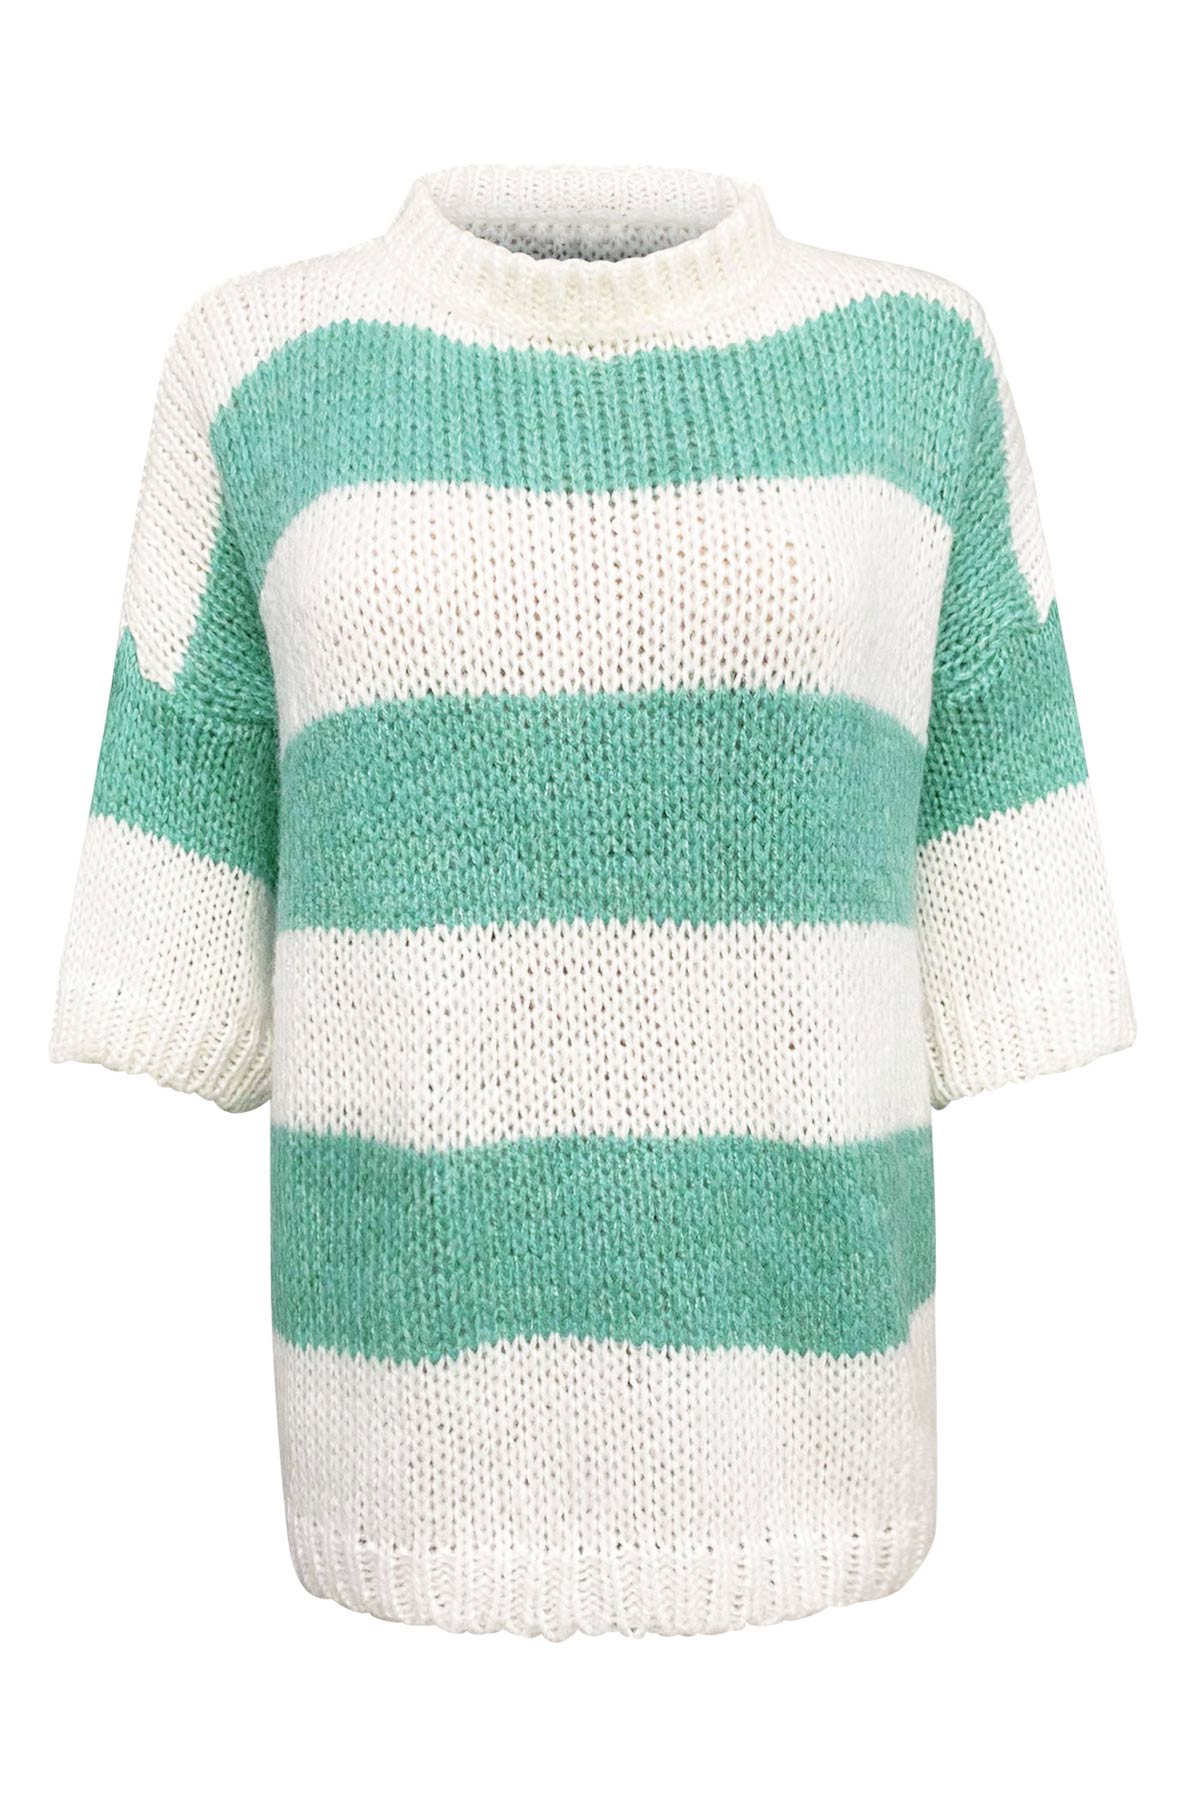 Binka Striped Knitted Jumper Sweater Top-Green